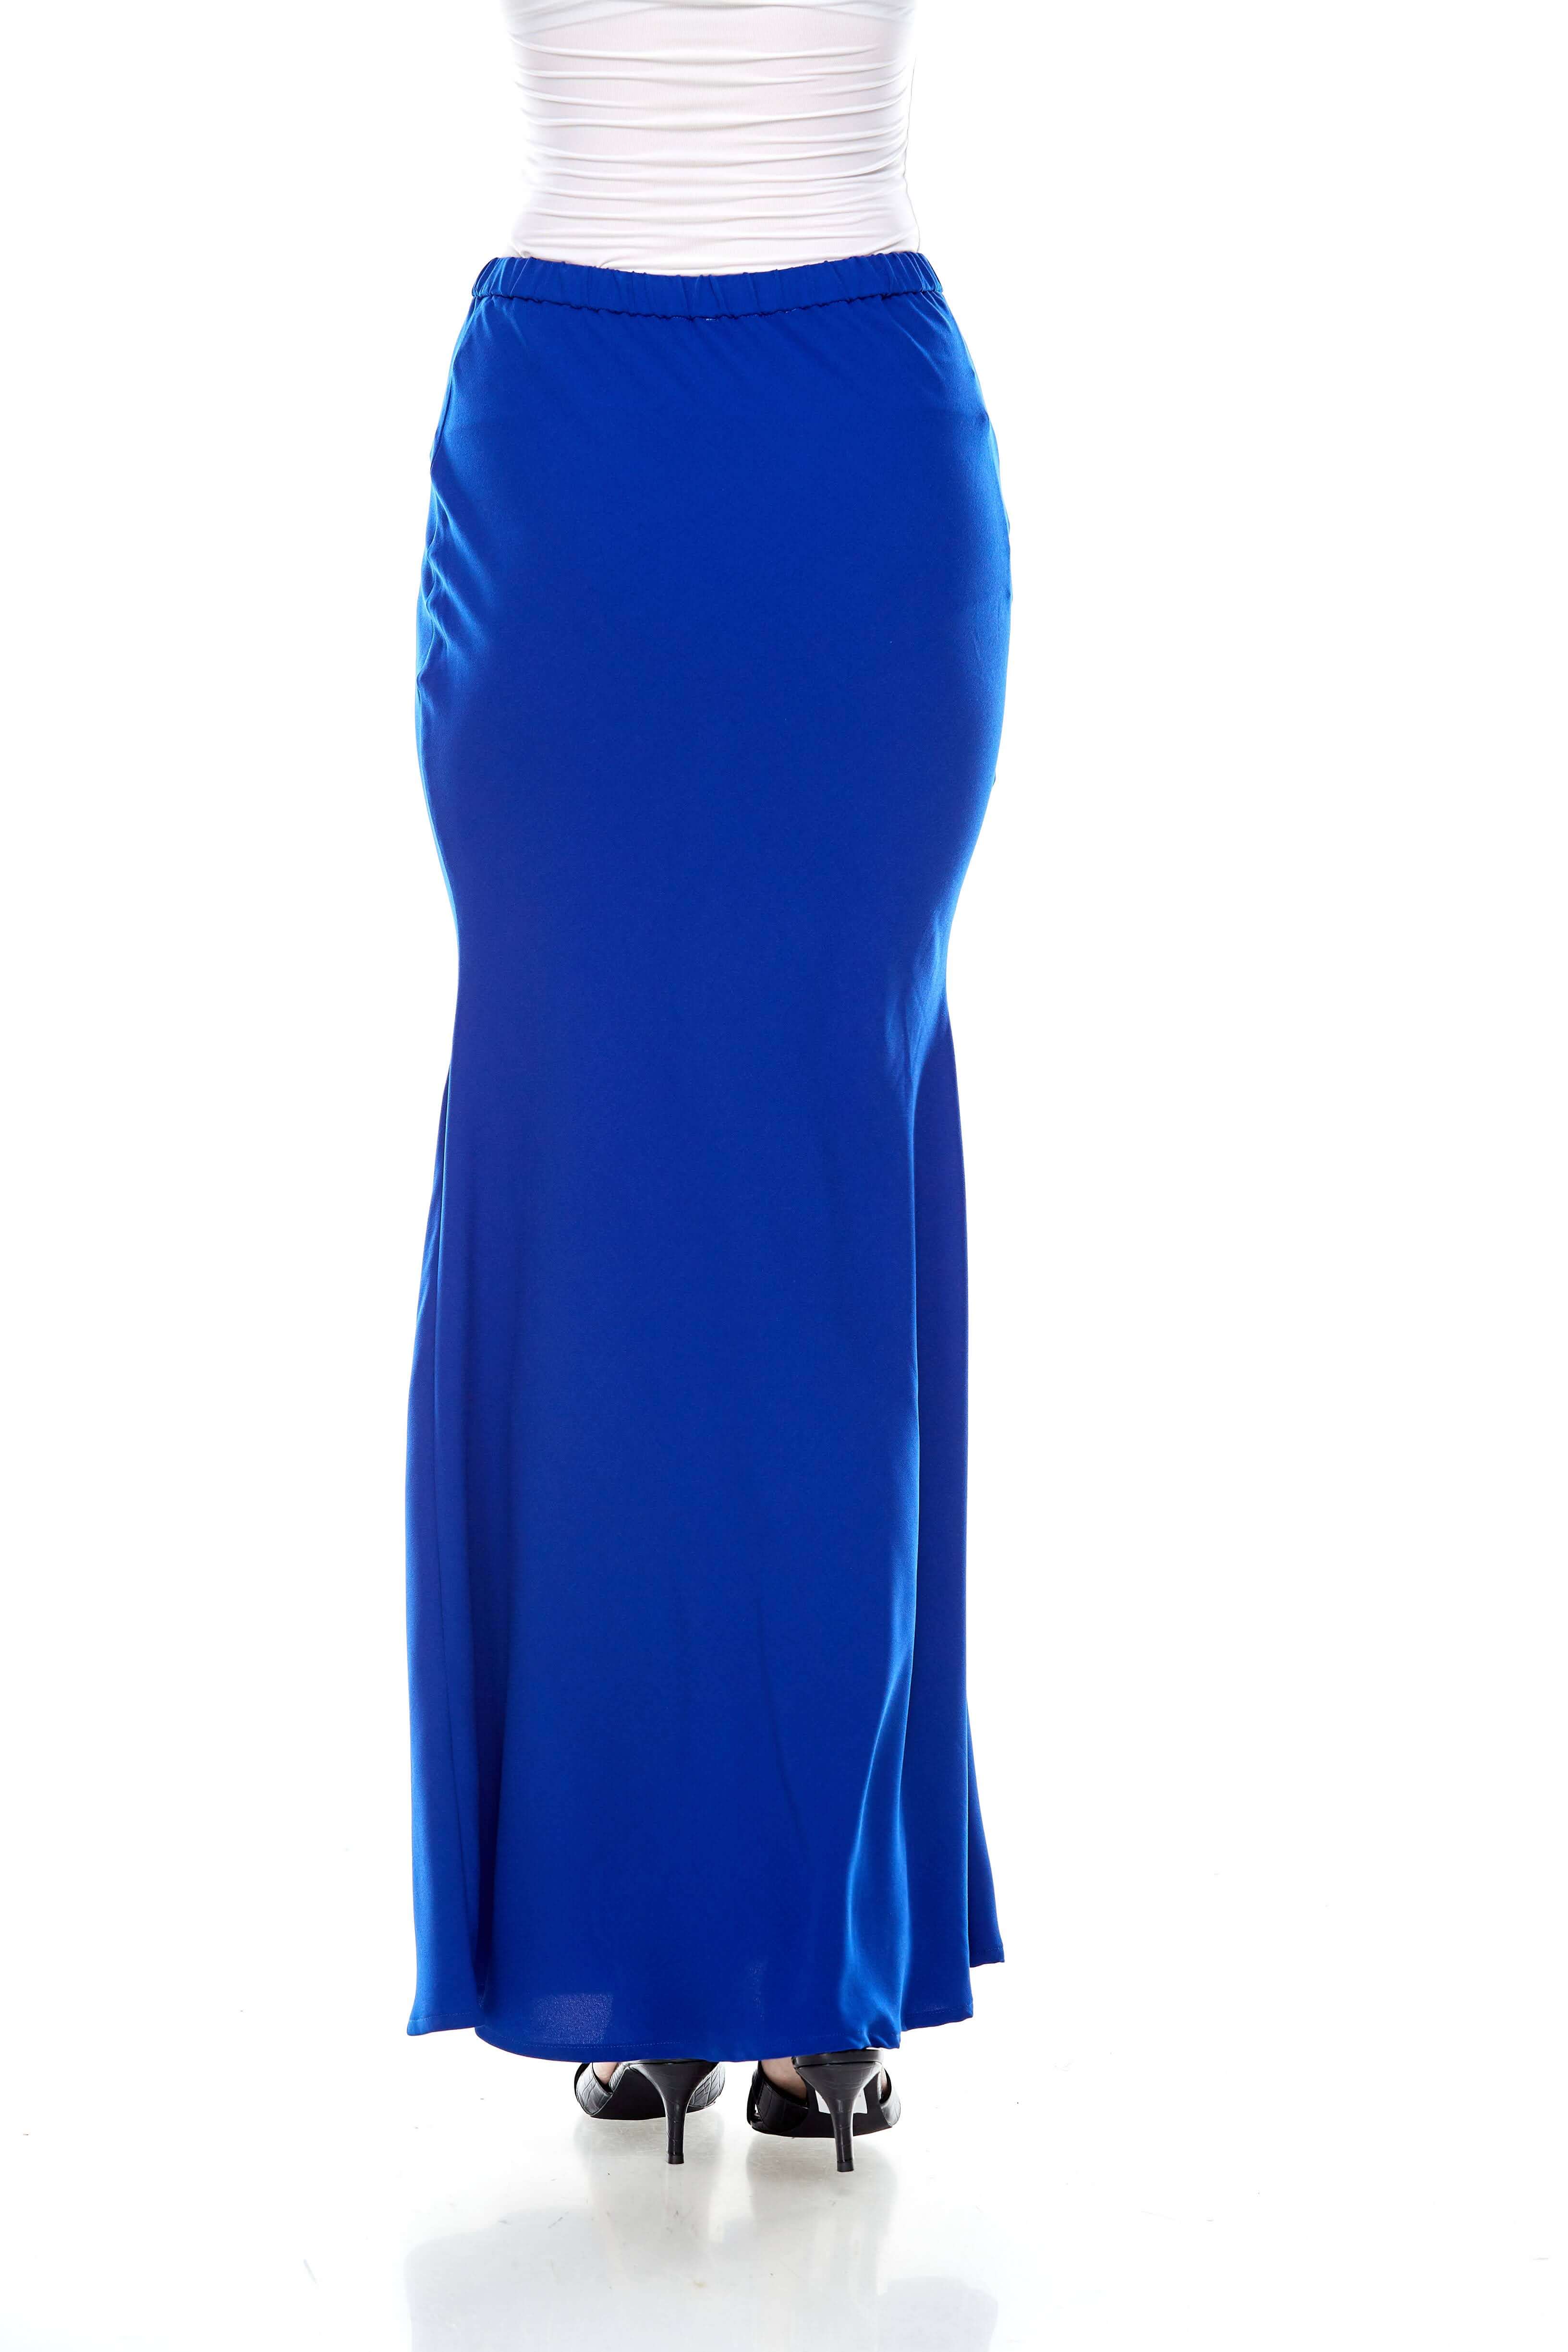 Royal Blue Mermaid Skirt (4)